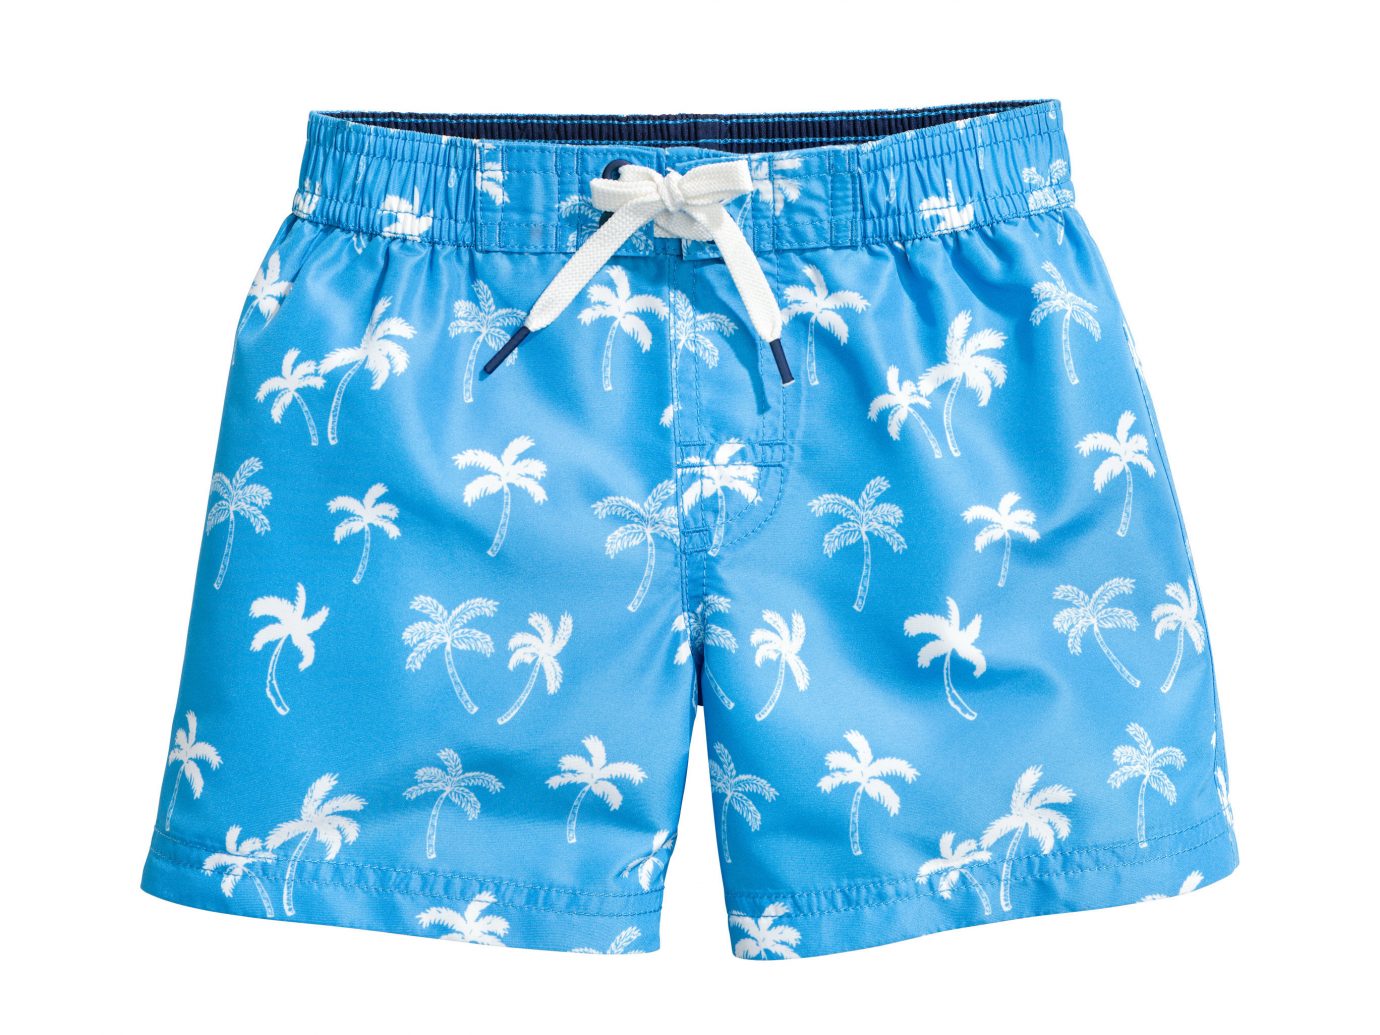 Style + Design clothing blue active shorts shorts underpants trunks aqua trouser product swim brief electric blue swimsuit bottom swimwear skirt